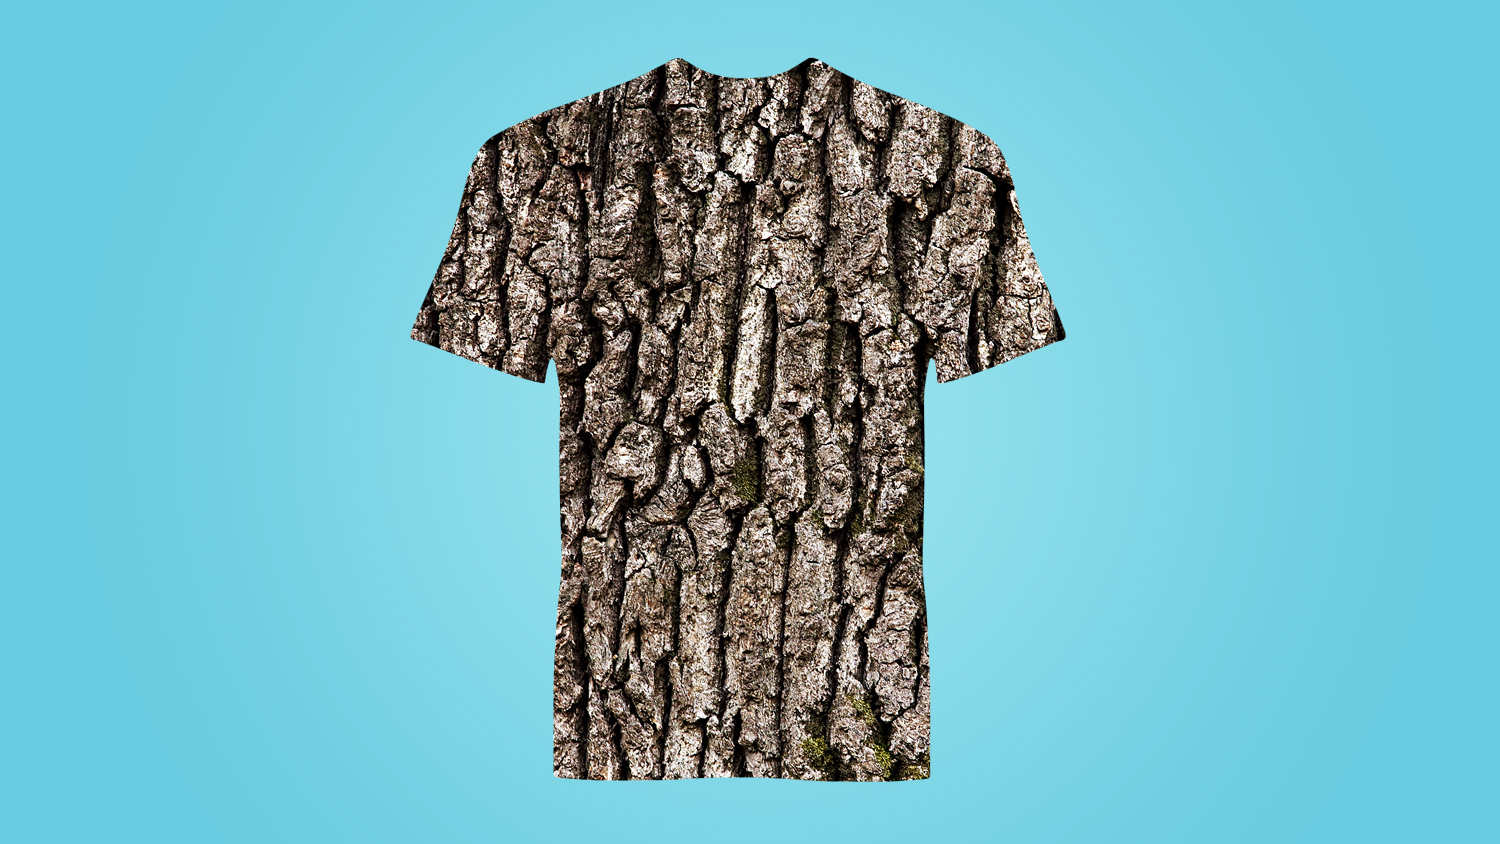 Shirt made of bark